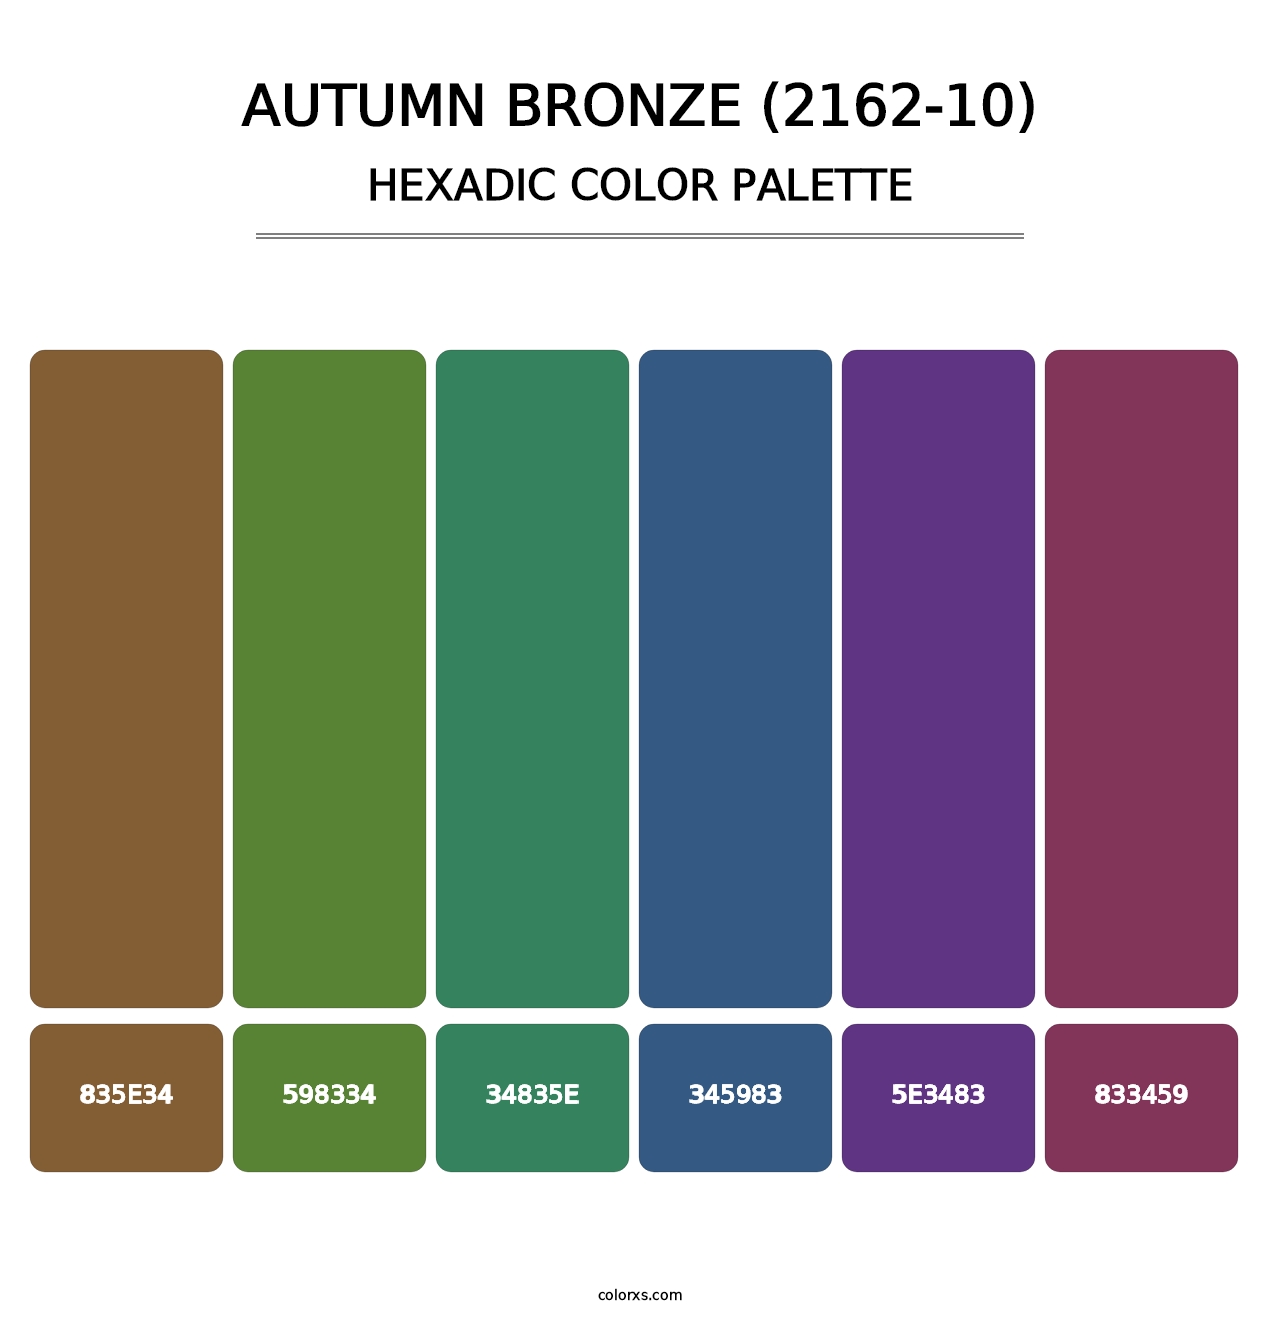 Autumn Bronze (2162-10) - Hexadic Color Palette